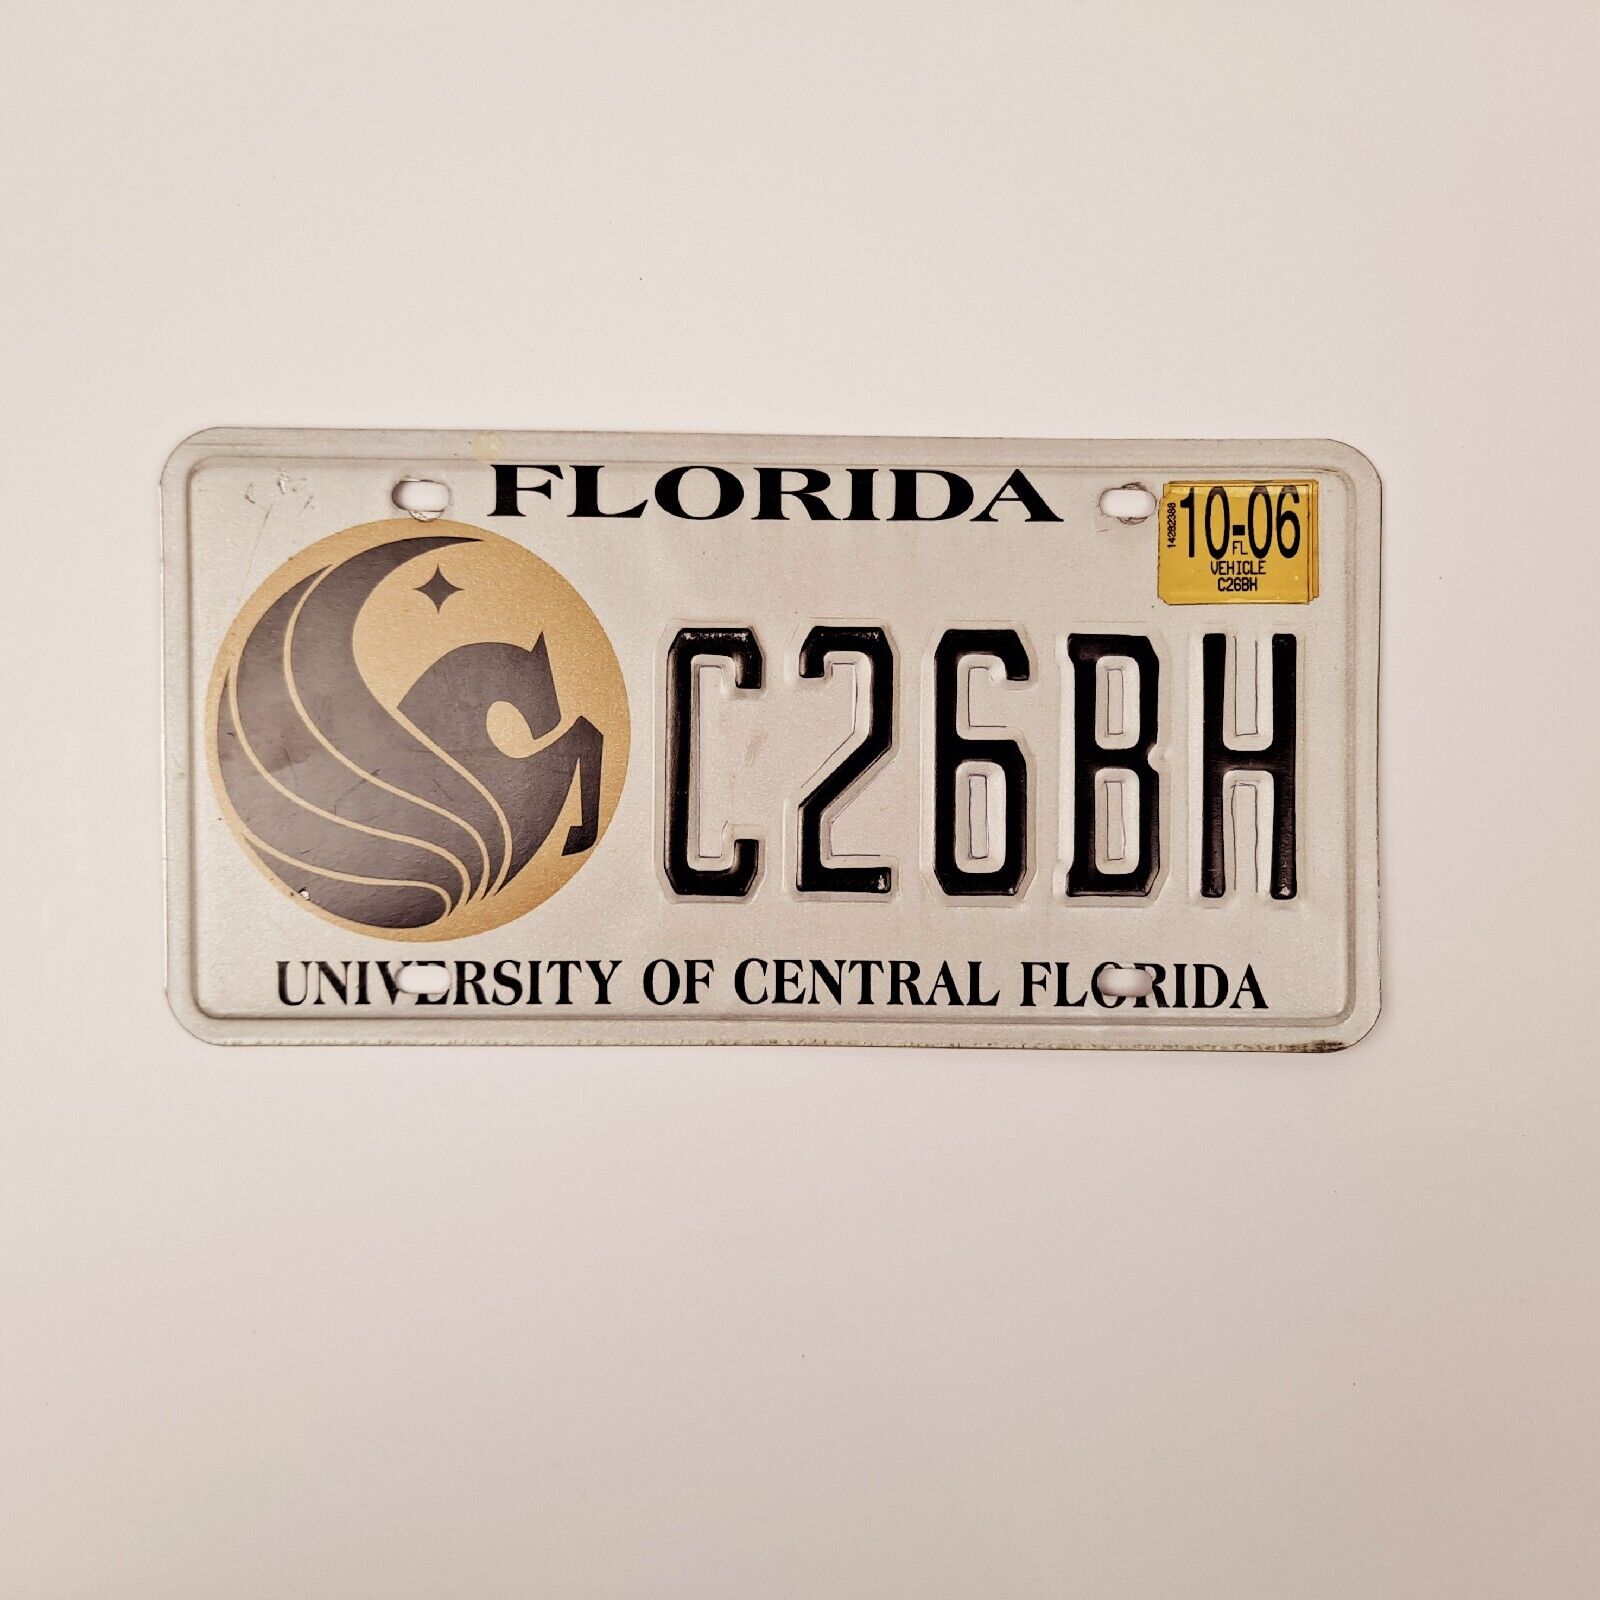 2006 FLORIDA -UNIVERSITY of CENTRAL FLORIDA license plate. Pegasus Tag #C26BH